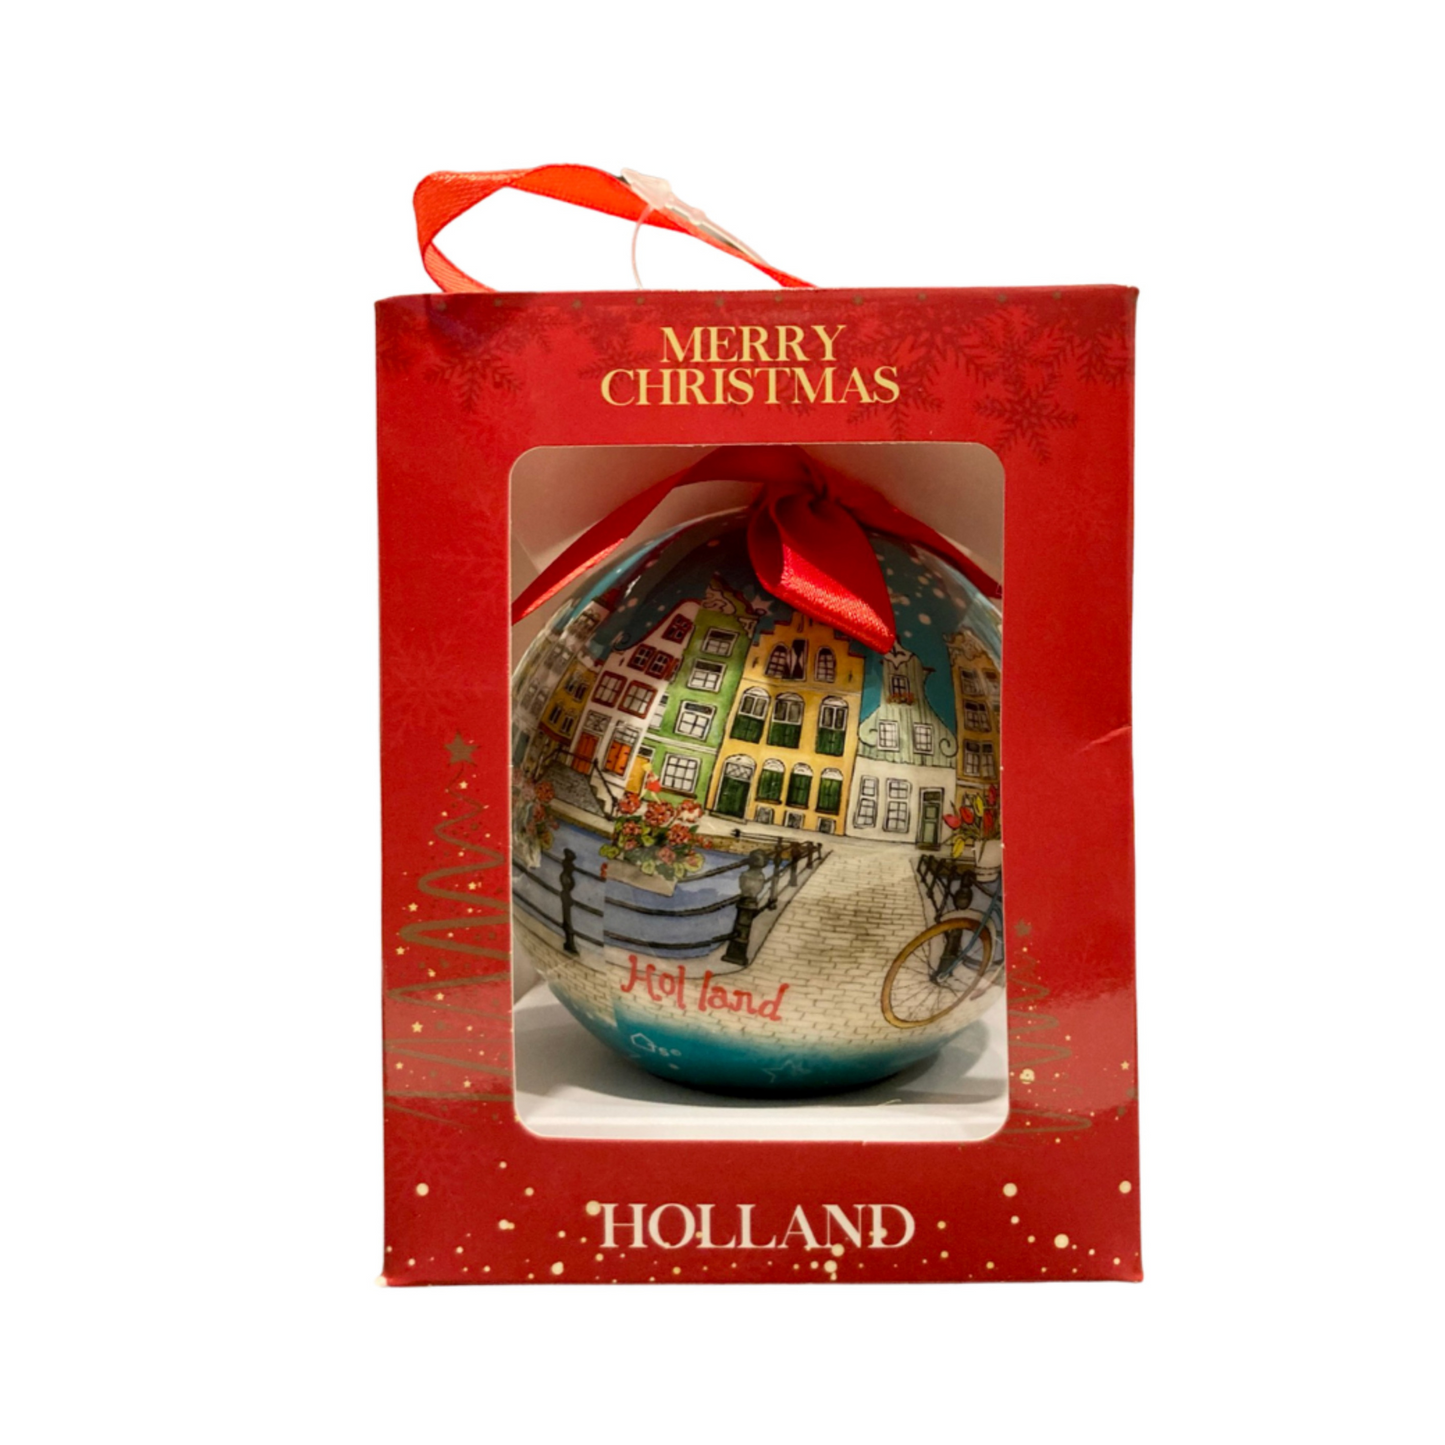 holland gift box fiets rood cadeau idee leuk kado meisje op de fiets op de amsterdamse grachten in nederland hoofdstad kerst ornament kerstbal grote kerstbal kerstmis